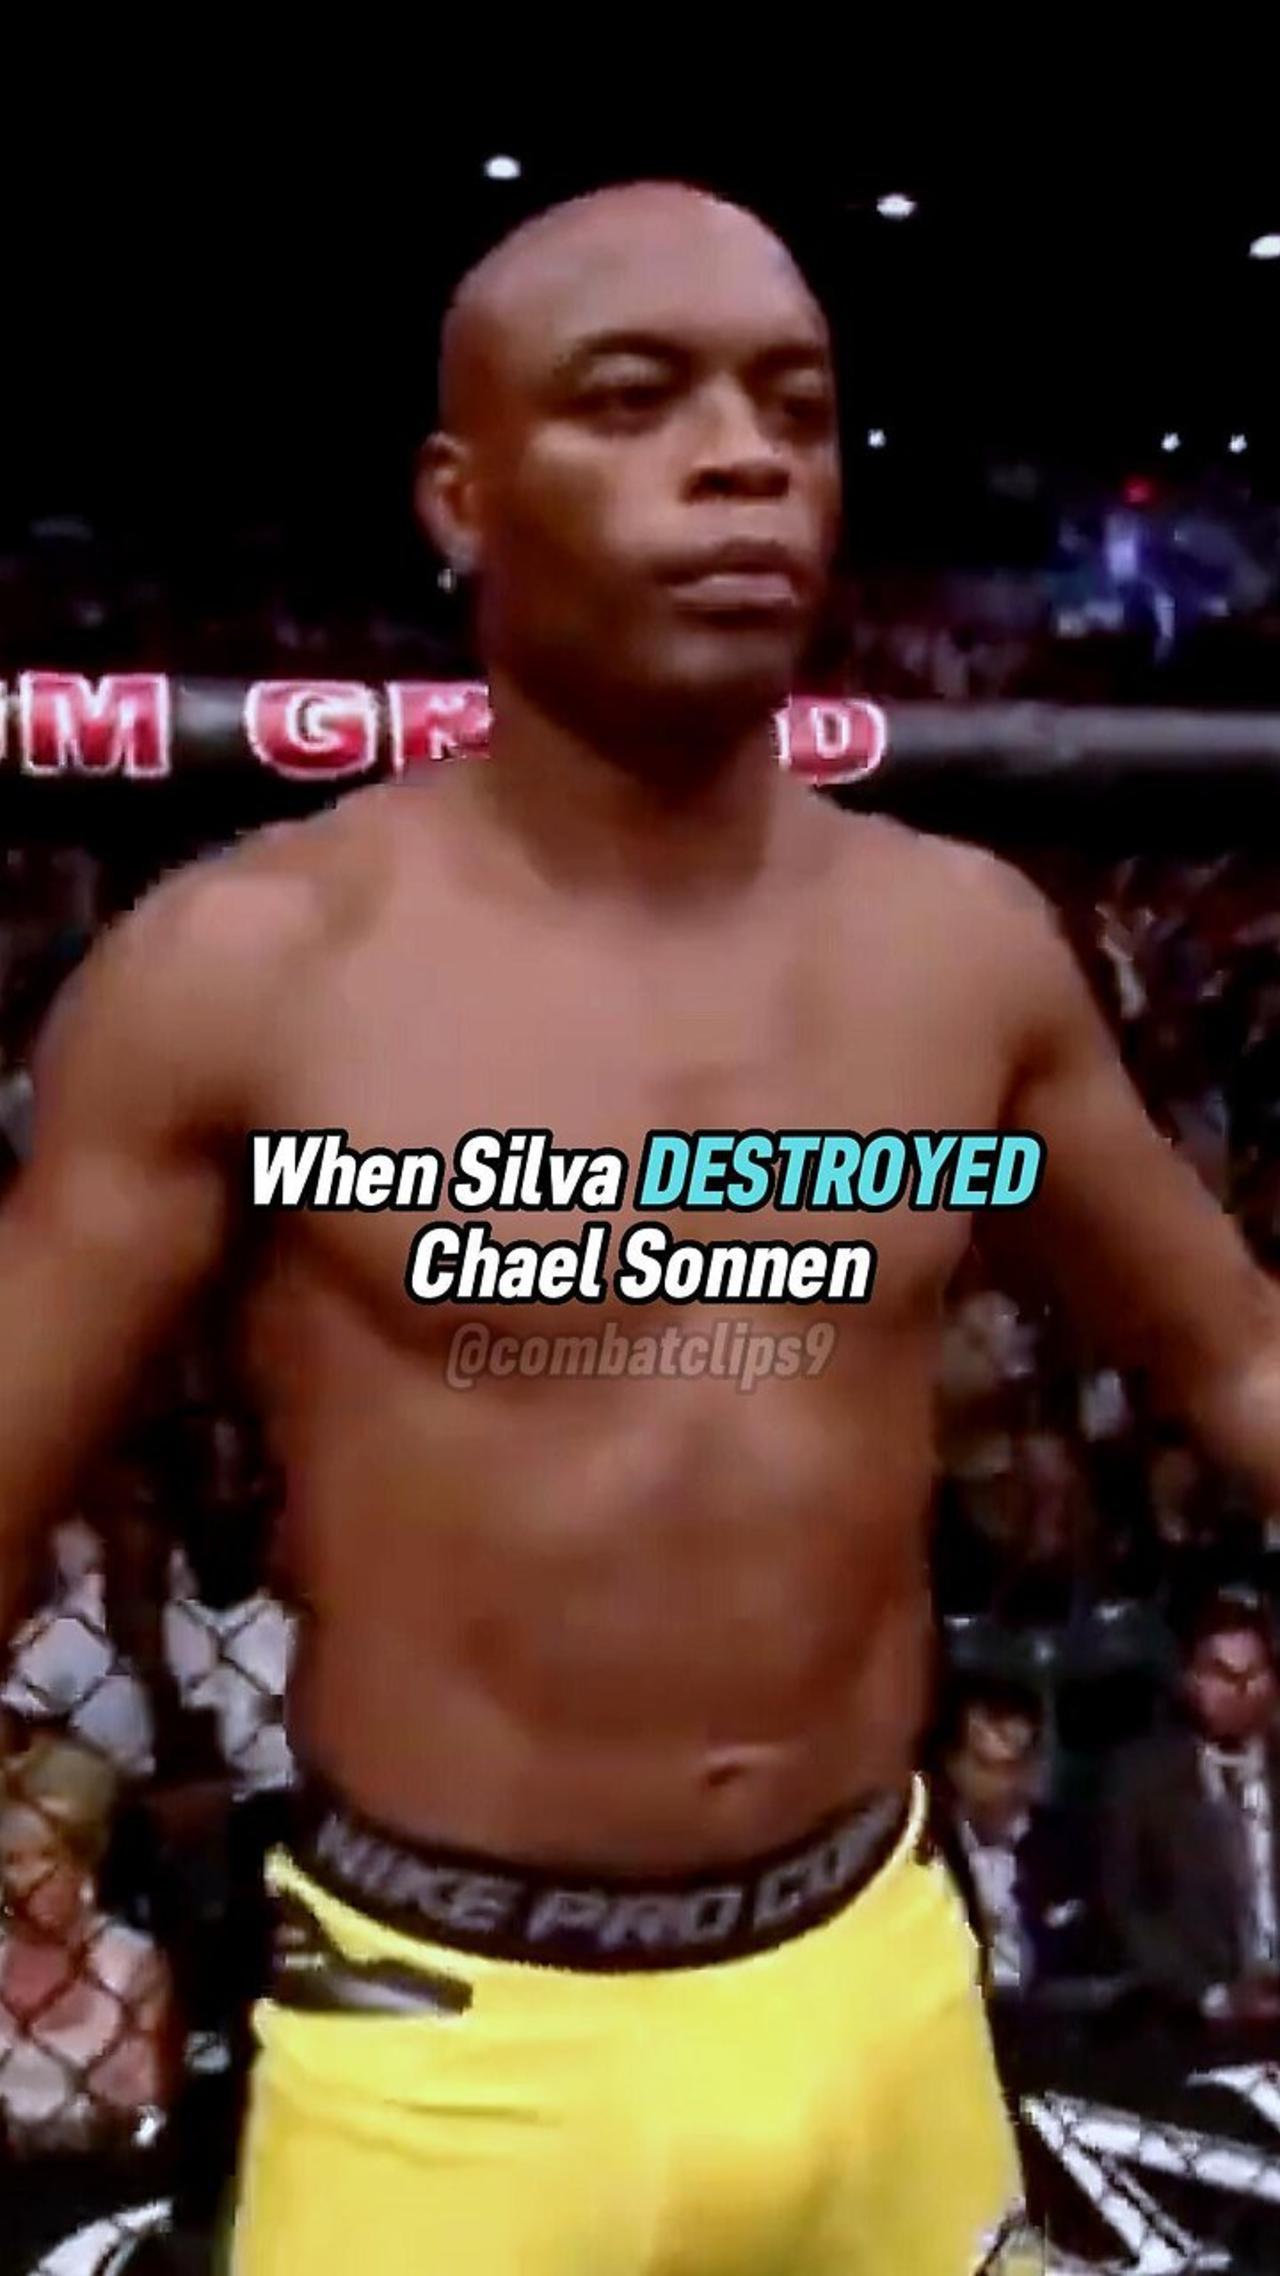 When Anderson Silva DESTROYED Chael Sonnen